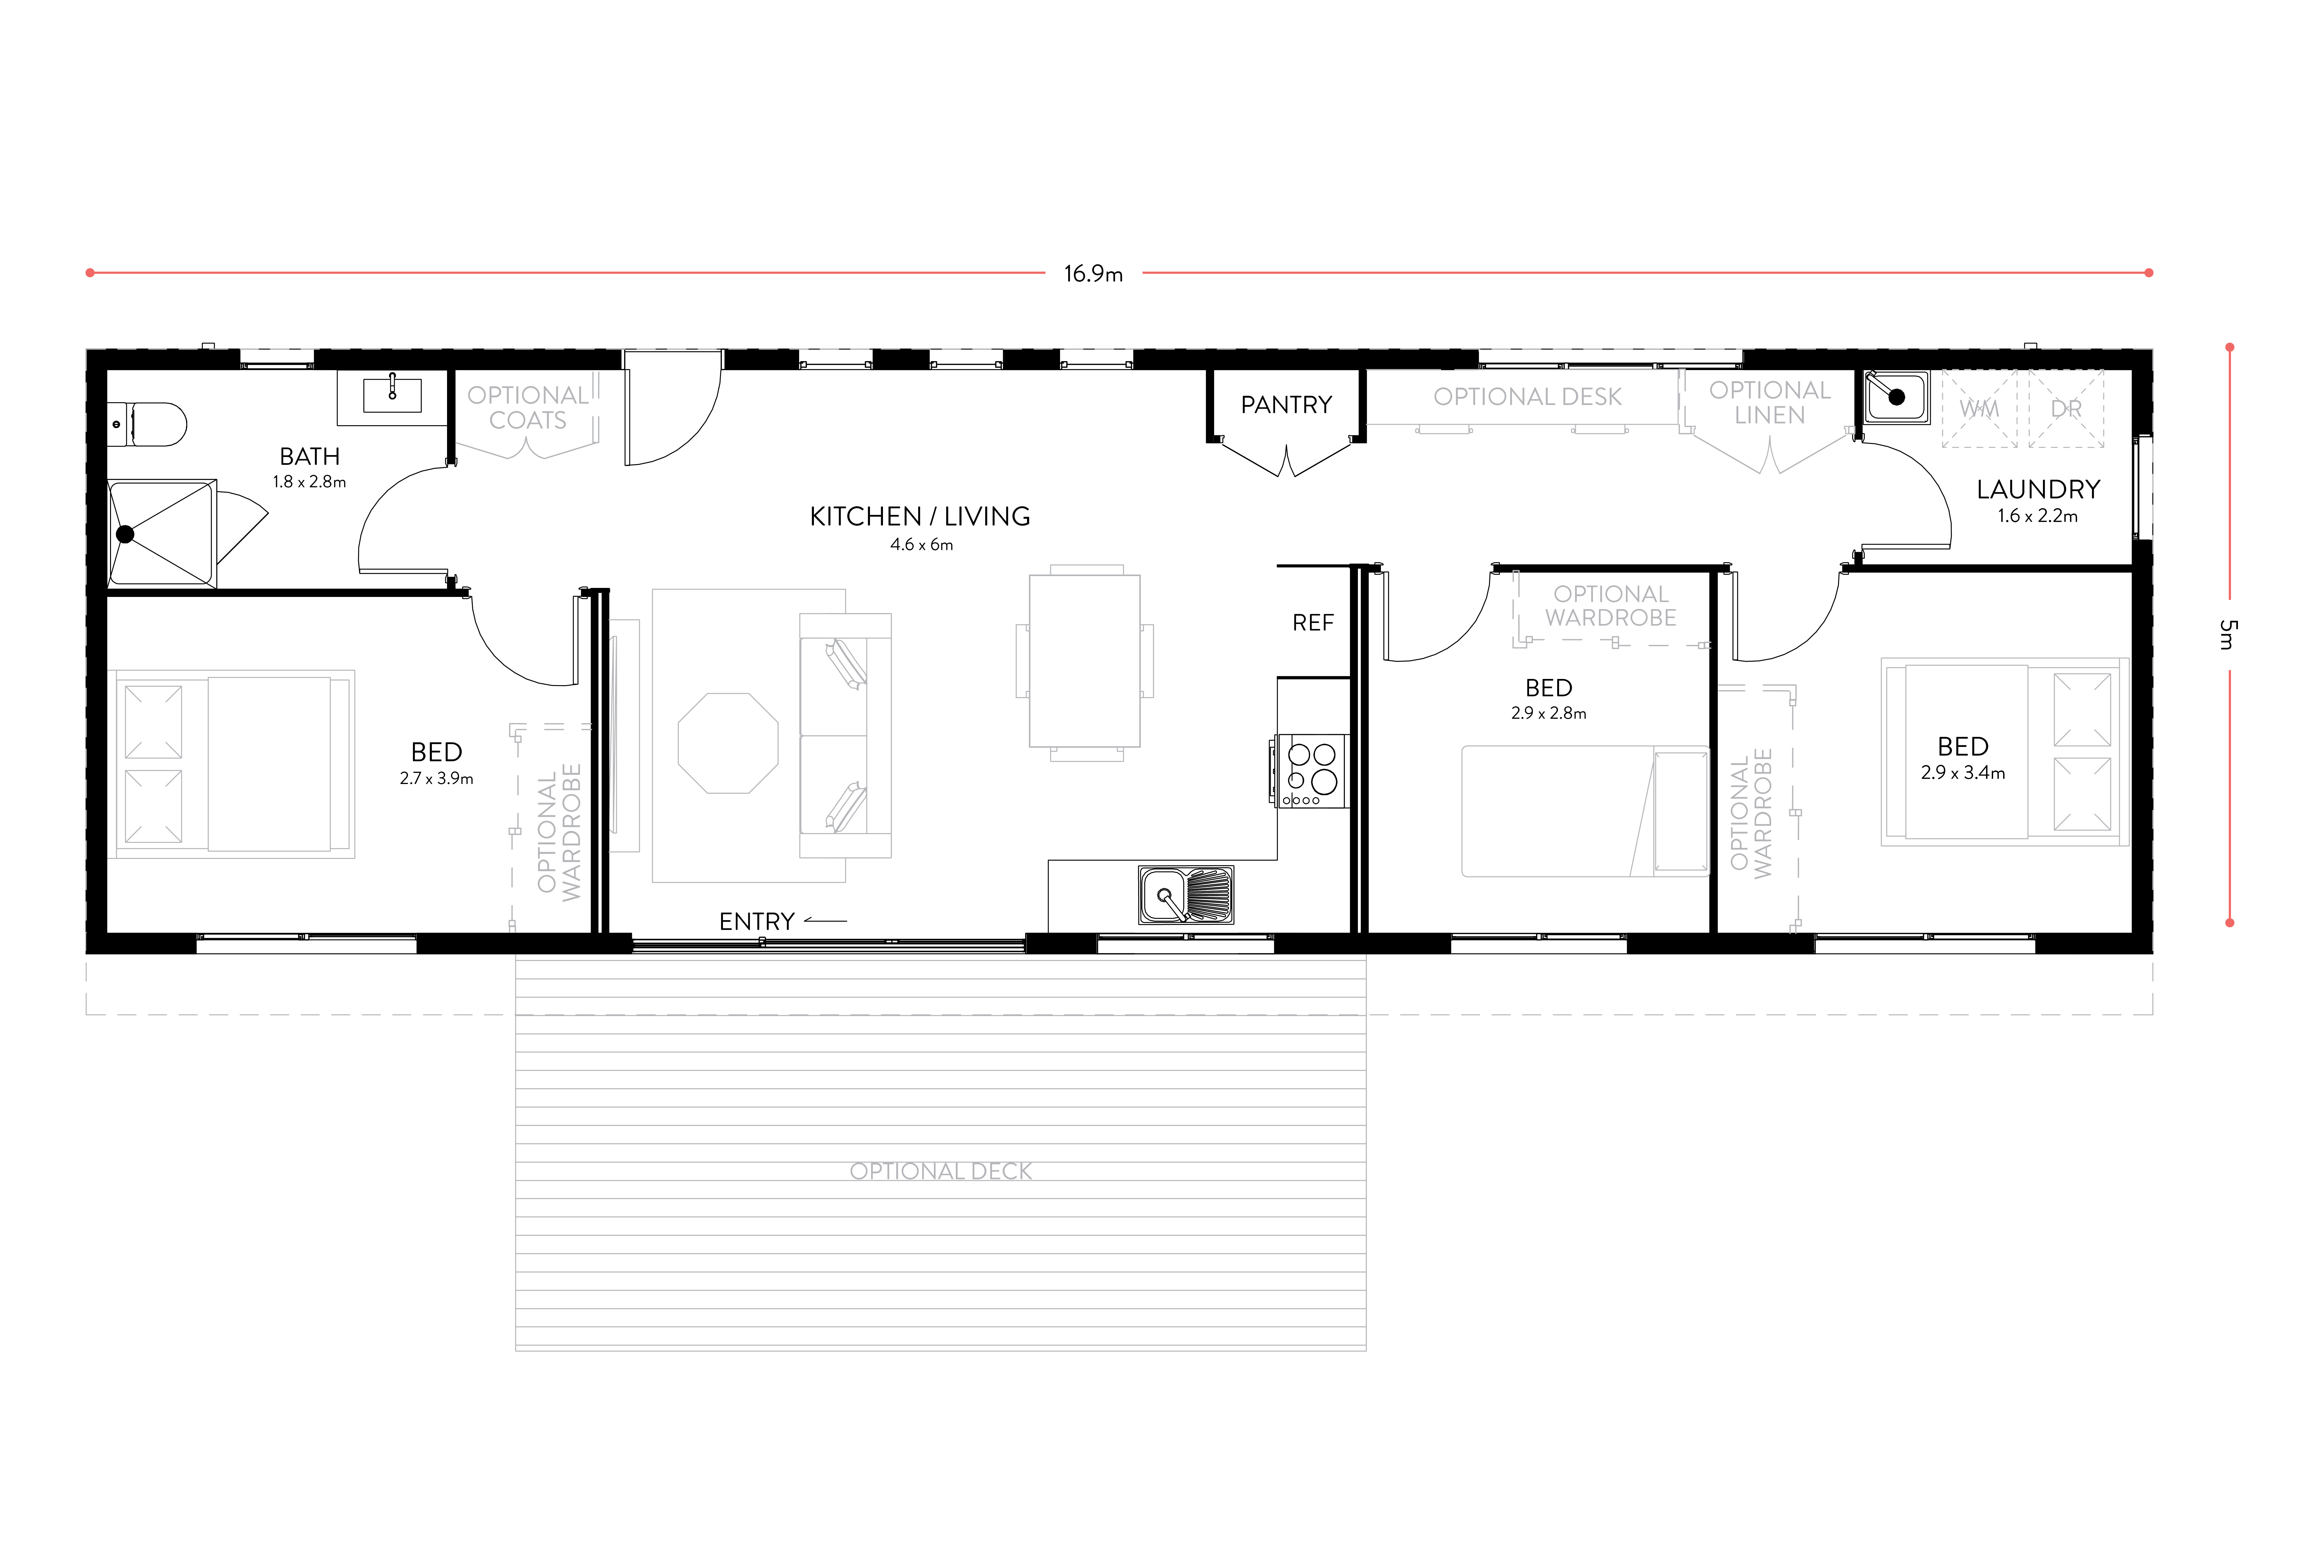 Floorplan of PLACEit modular home - Coolum 14